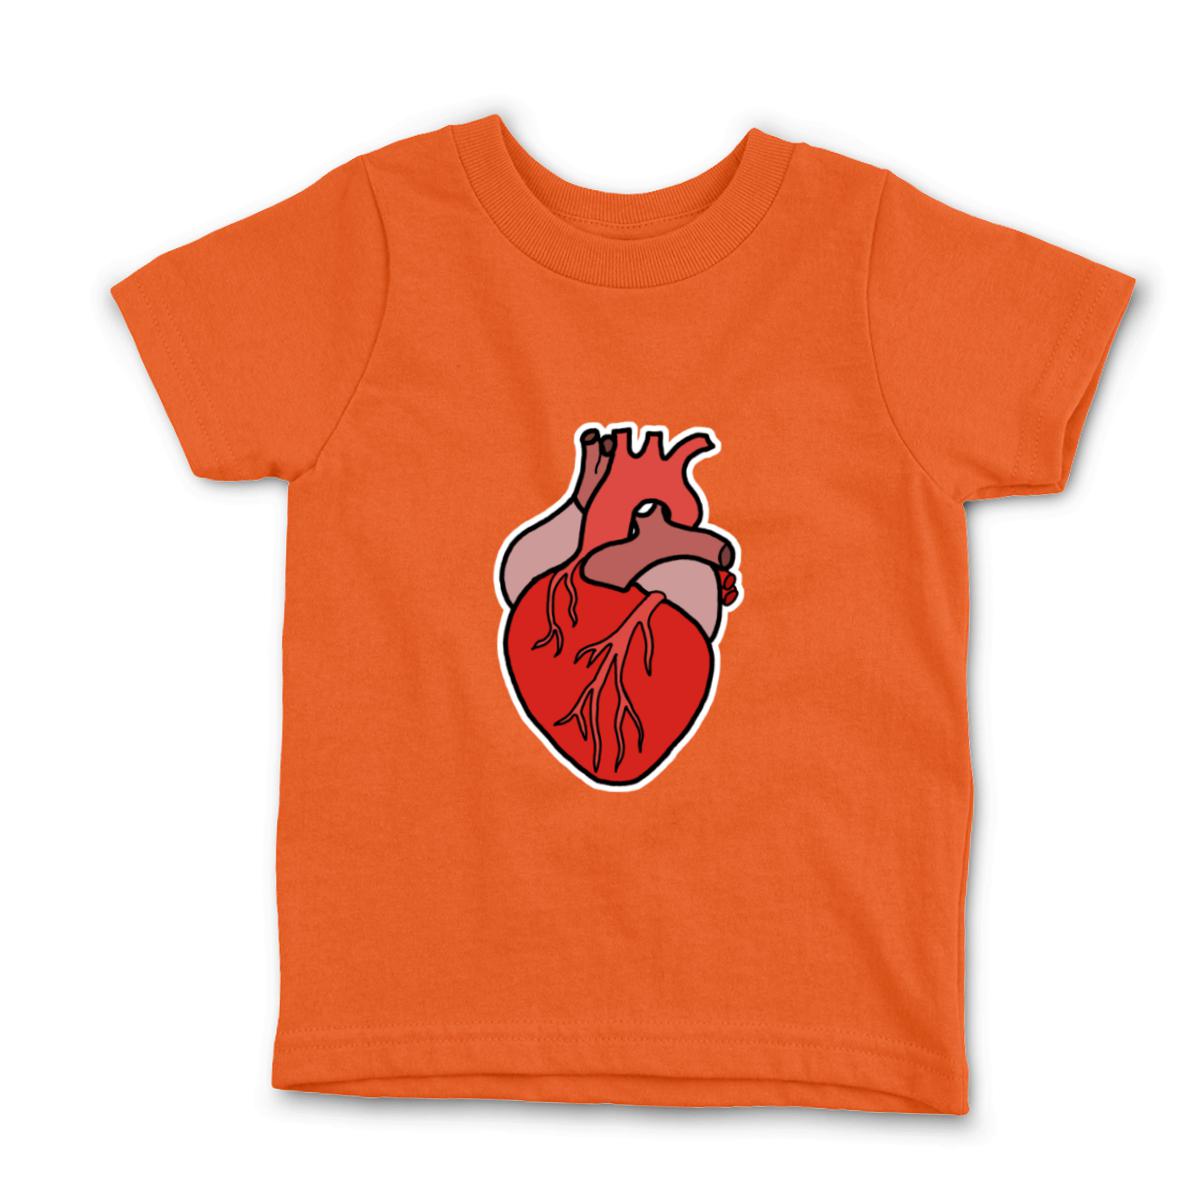 Illustrative Heart Kid's Tee Small orange